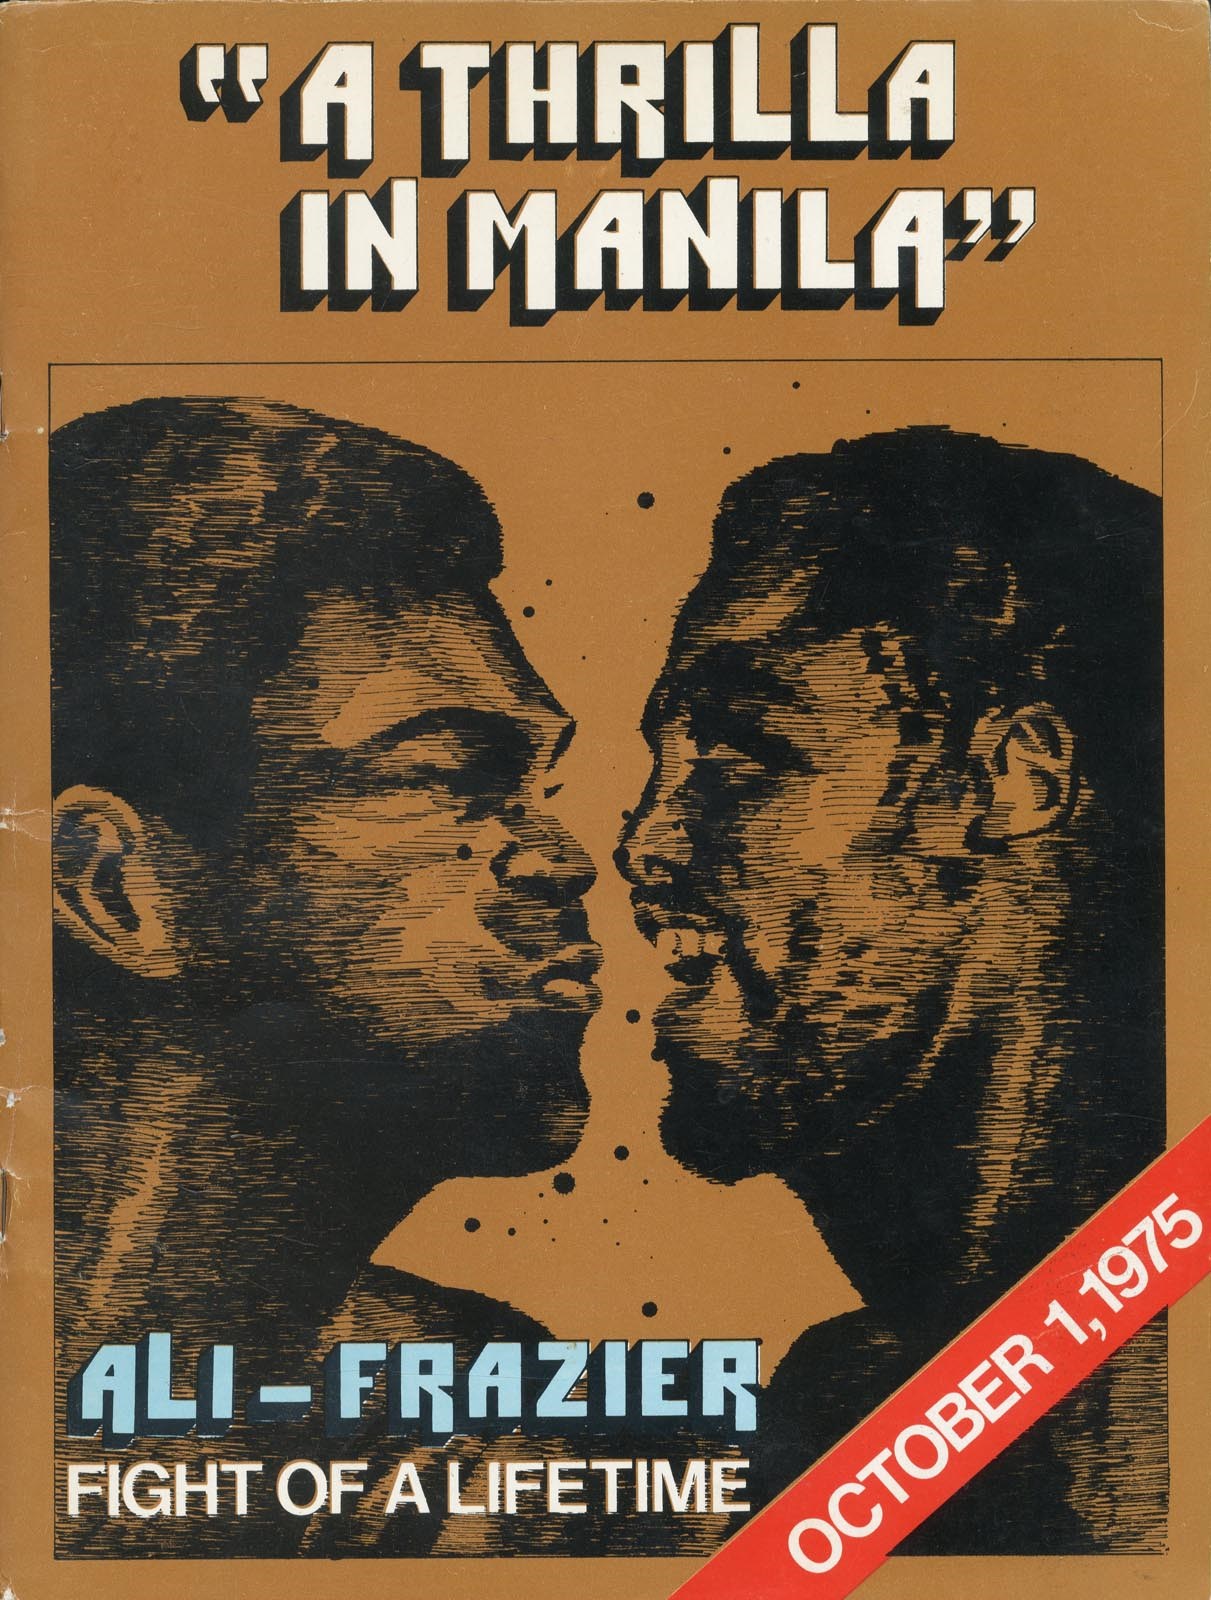 Best of the Best - 1975 Ali vs. Frazier III "Thrilla in Manila" On-Site Program